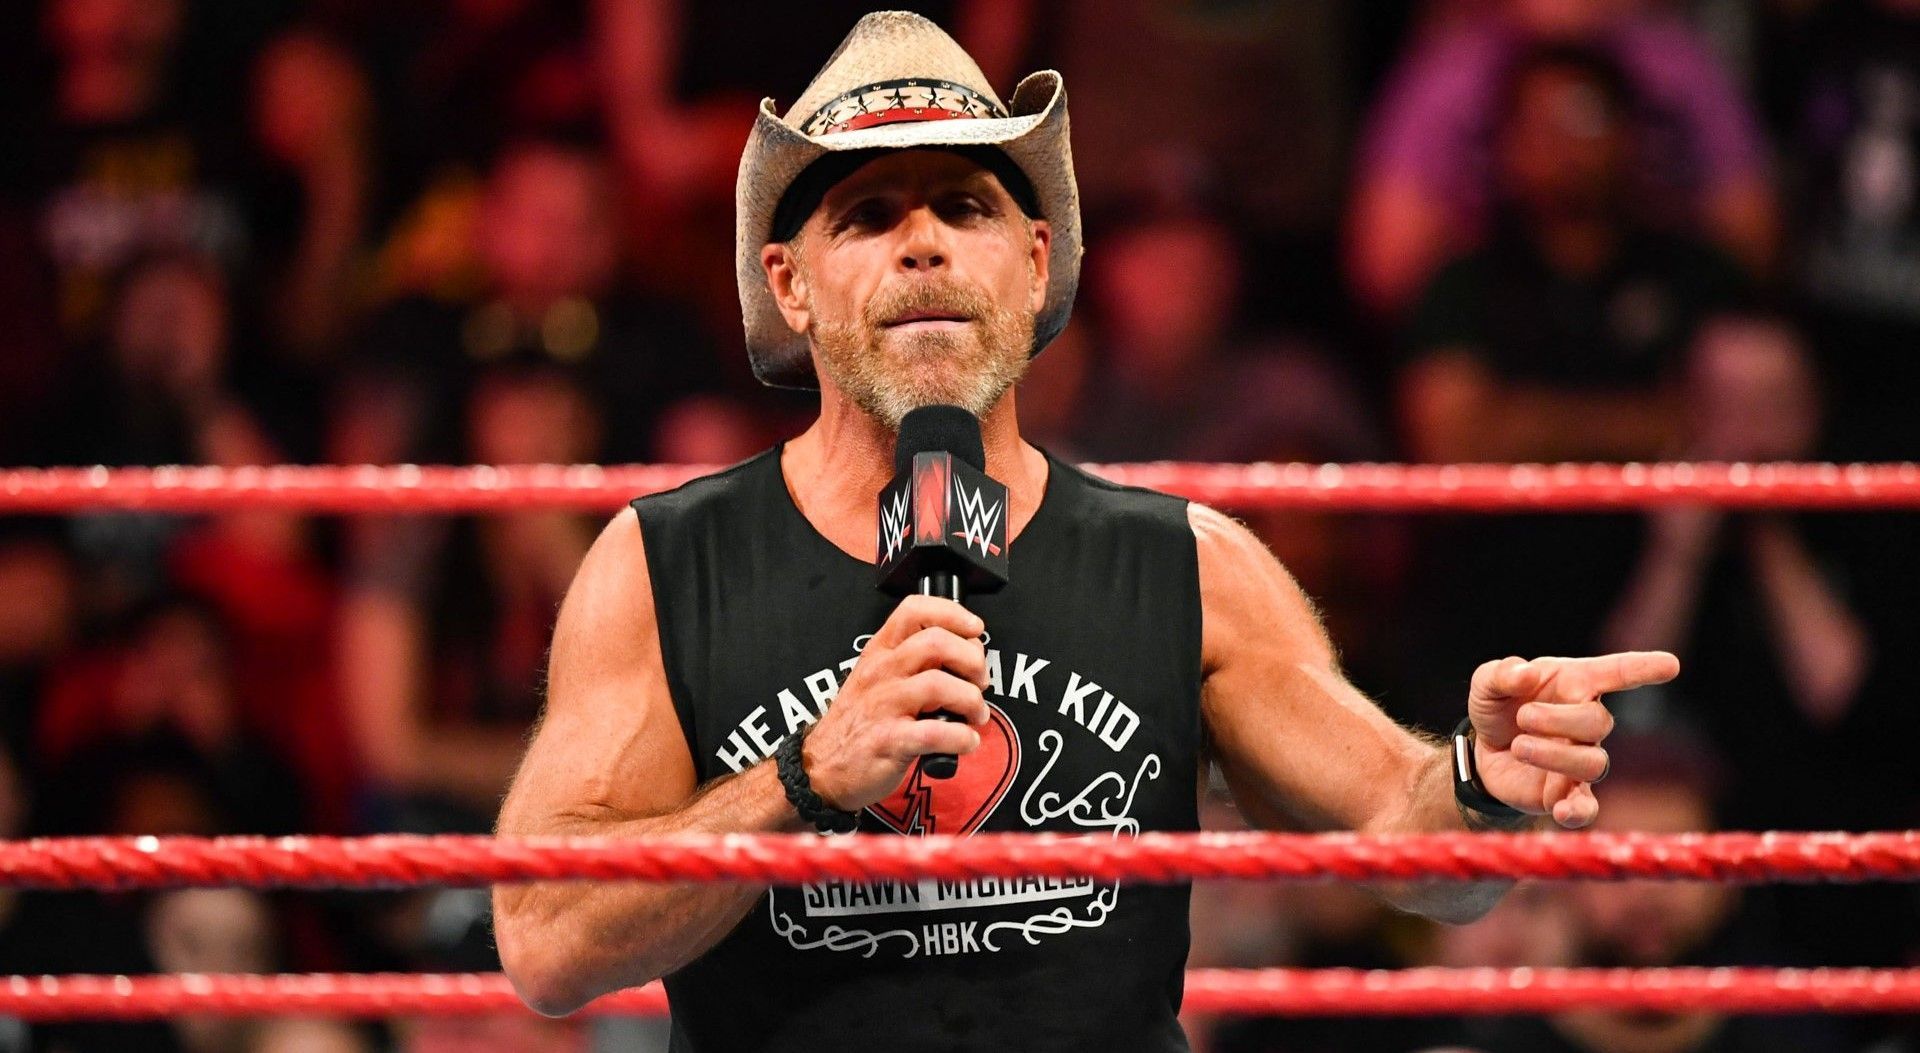 This former WWE star was well liked backstage (Image via WWE.com)